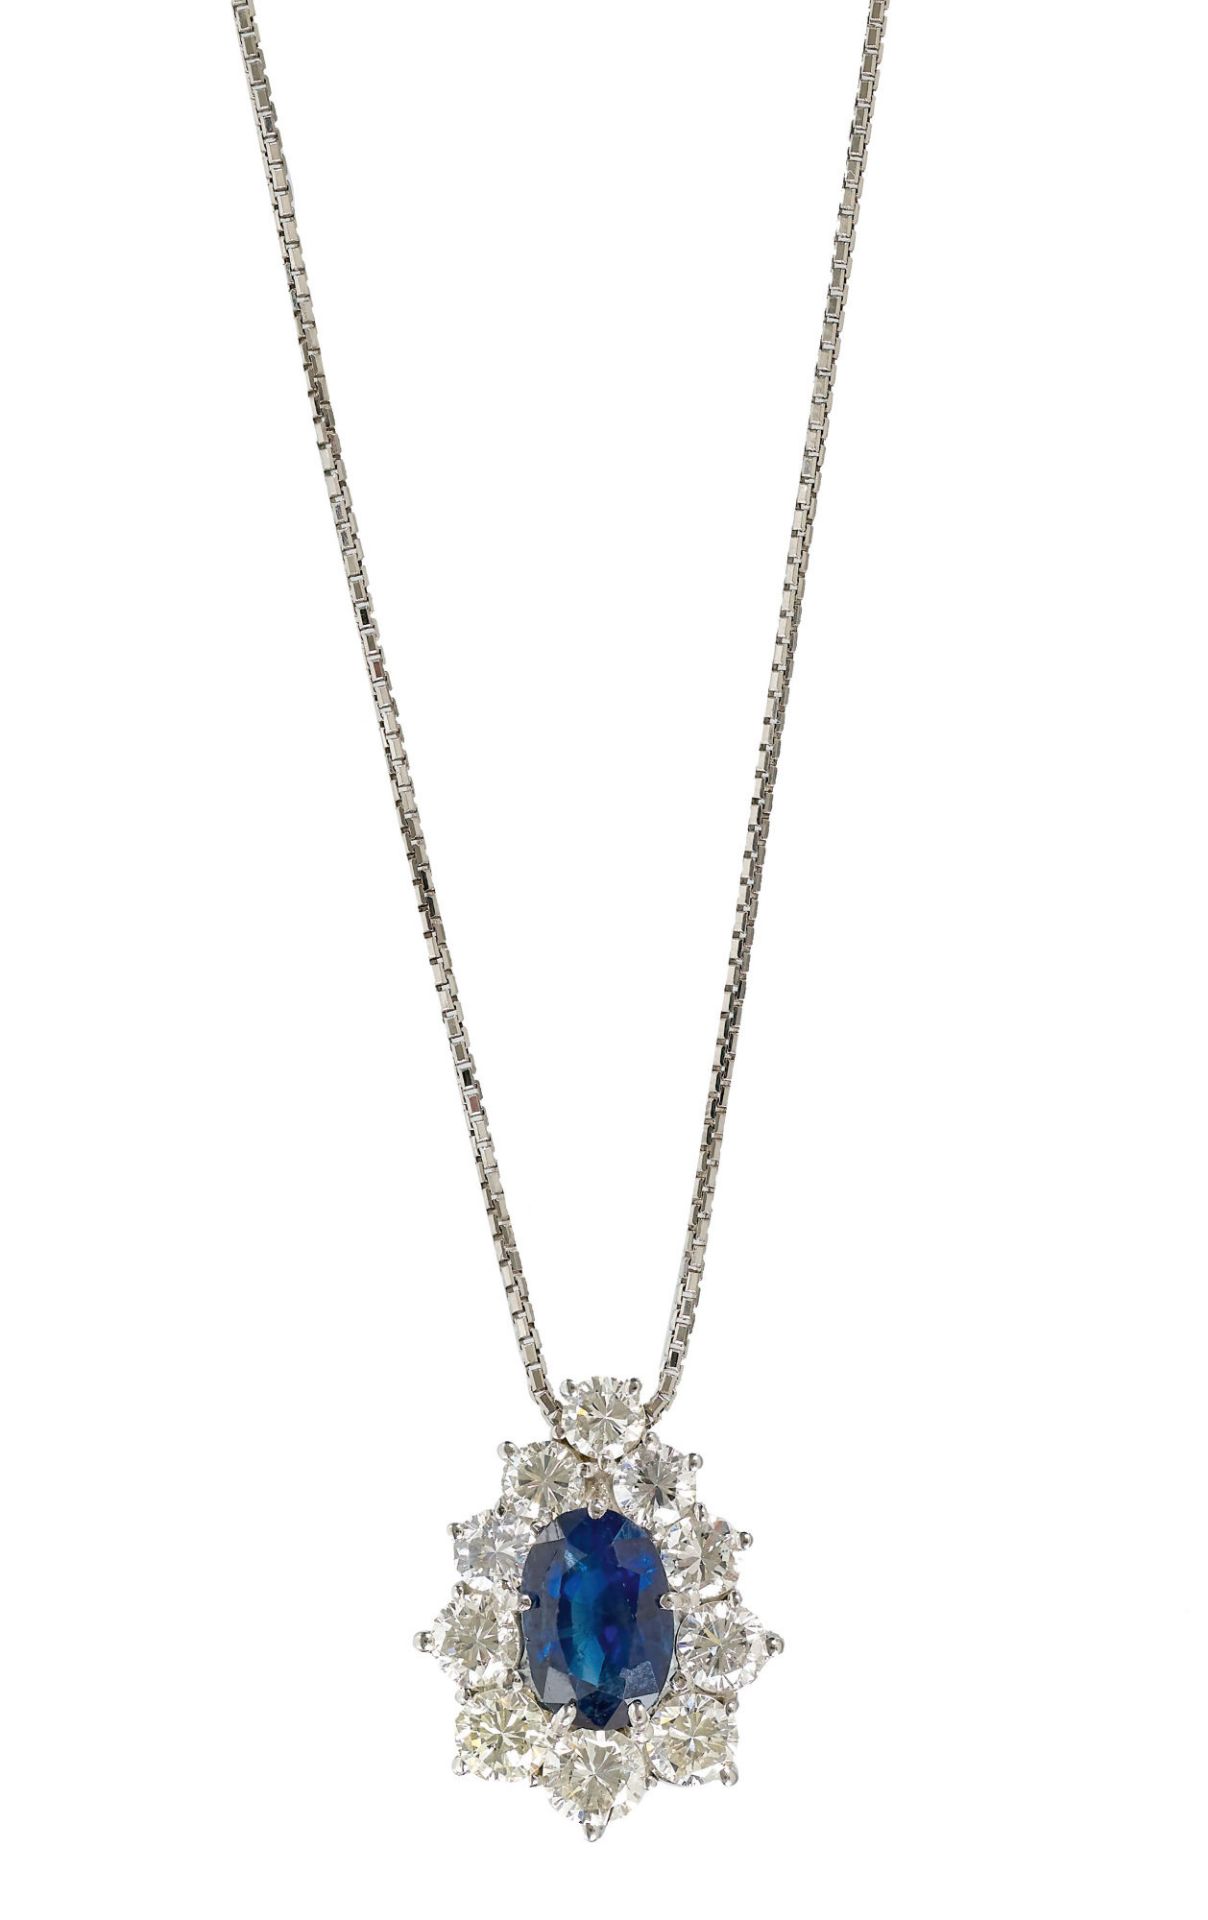 SAPHIR-BRILLANT-ANHÄNGER MIT KETTE / Sapphire-diamond-pendant necklace - Image 2 of 2